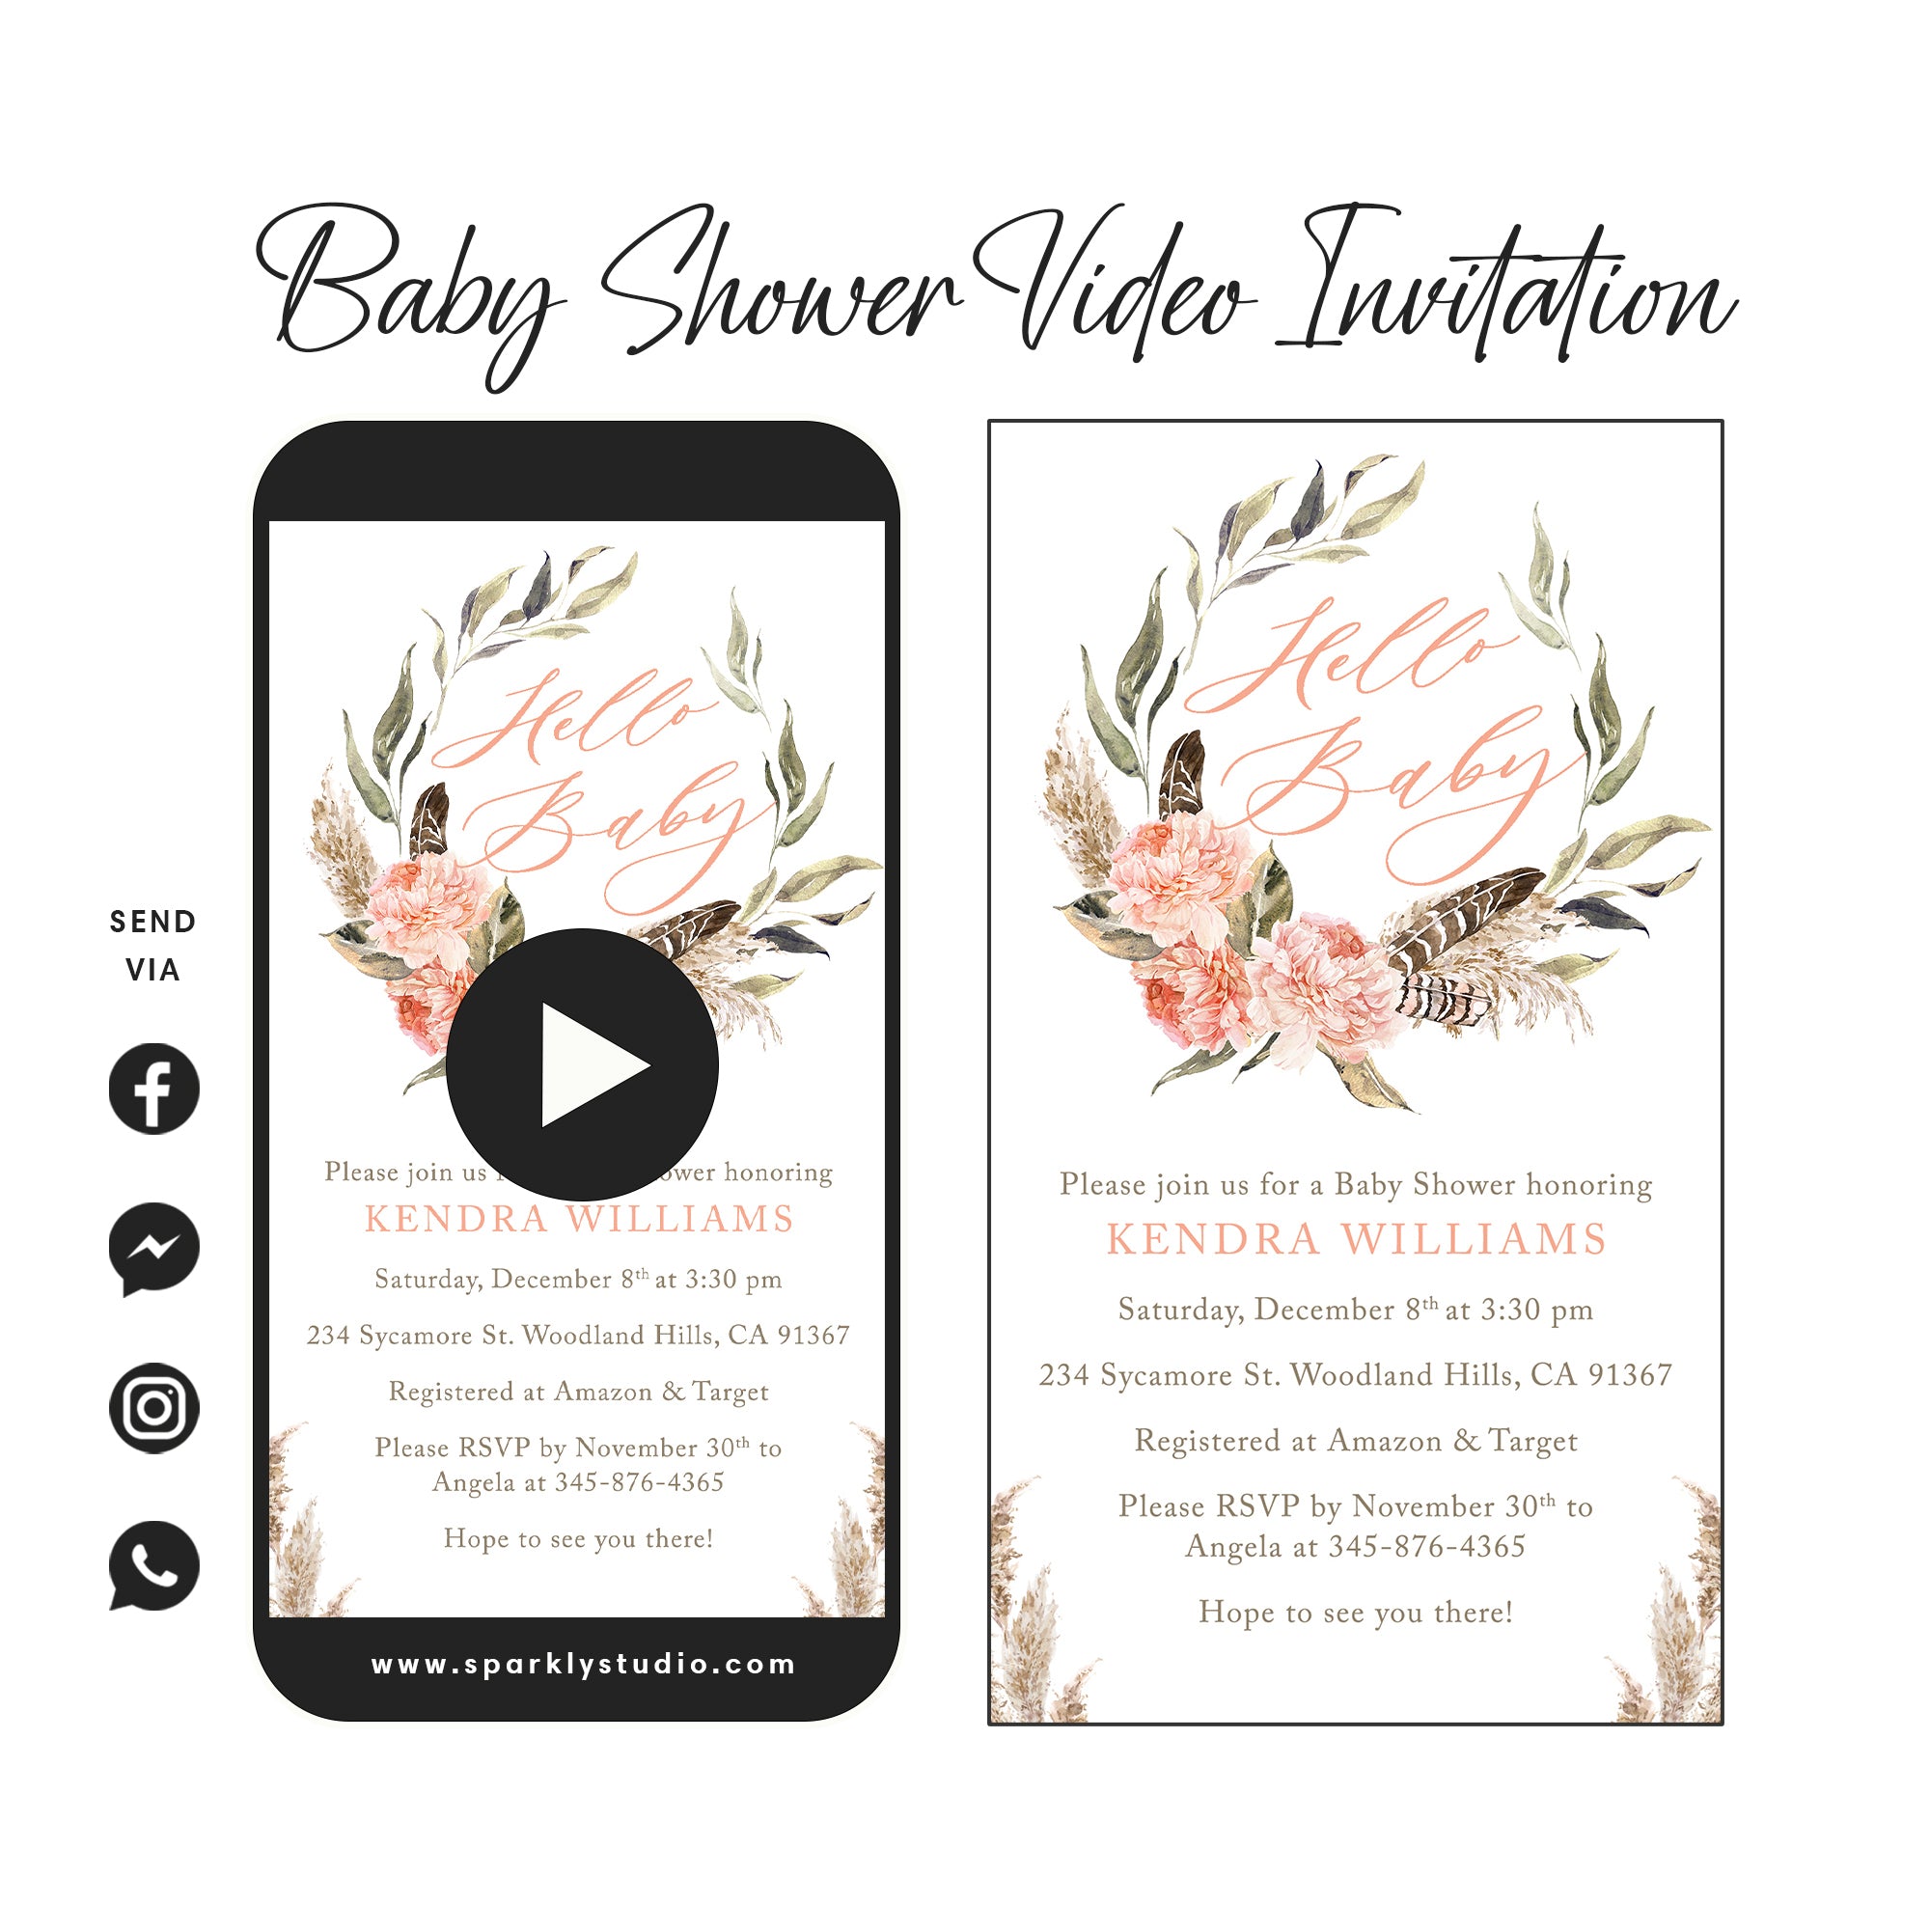 Boho Baby Shower Video Invitation